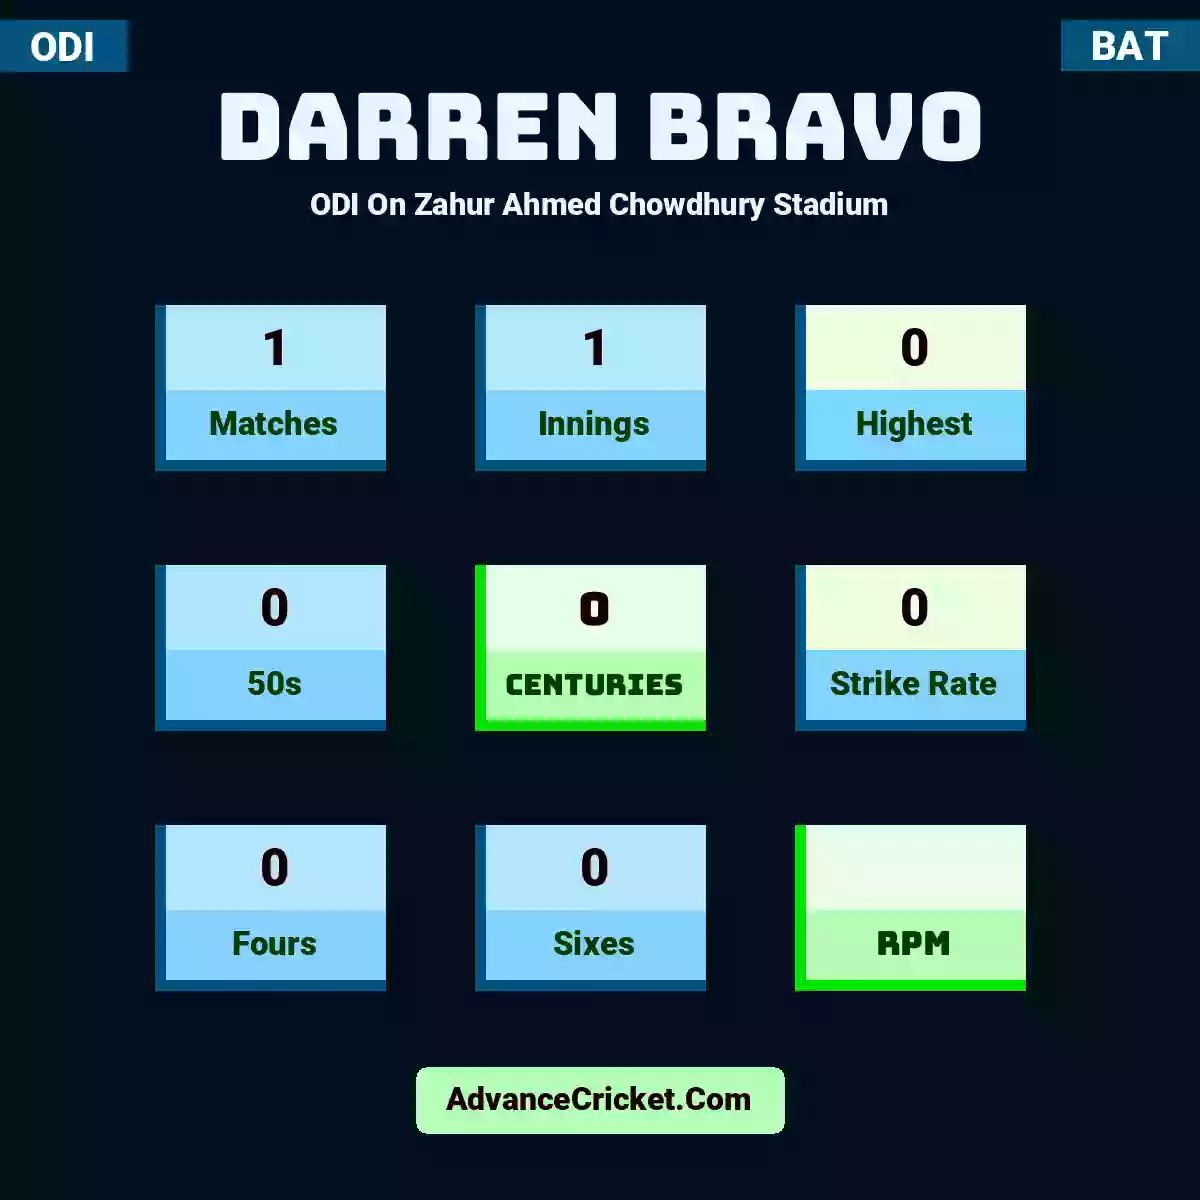 Darren Bravo ODI  On Zahur Ahmed Chowdhury Stadium, Darren Bravo played 1 matches, scored 0 runs as highest, 0 half-centuries, and 0 centuries, with a strike rate of 0. D.Bravo hit 0 fours and 0 sixes.